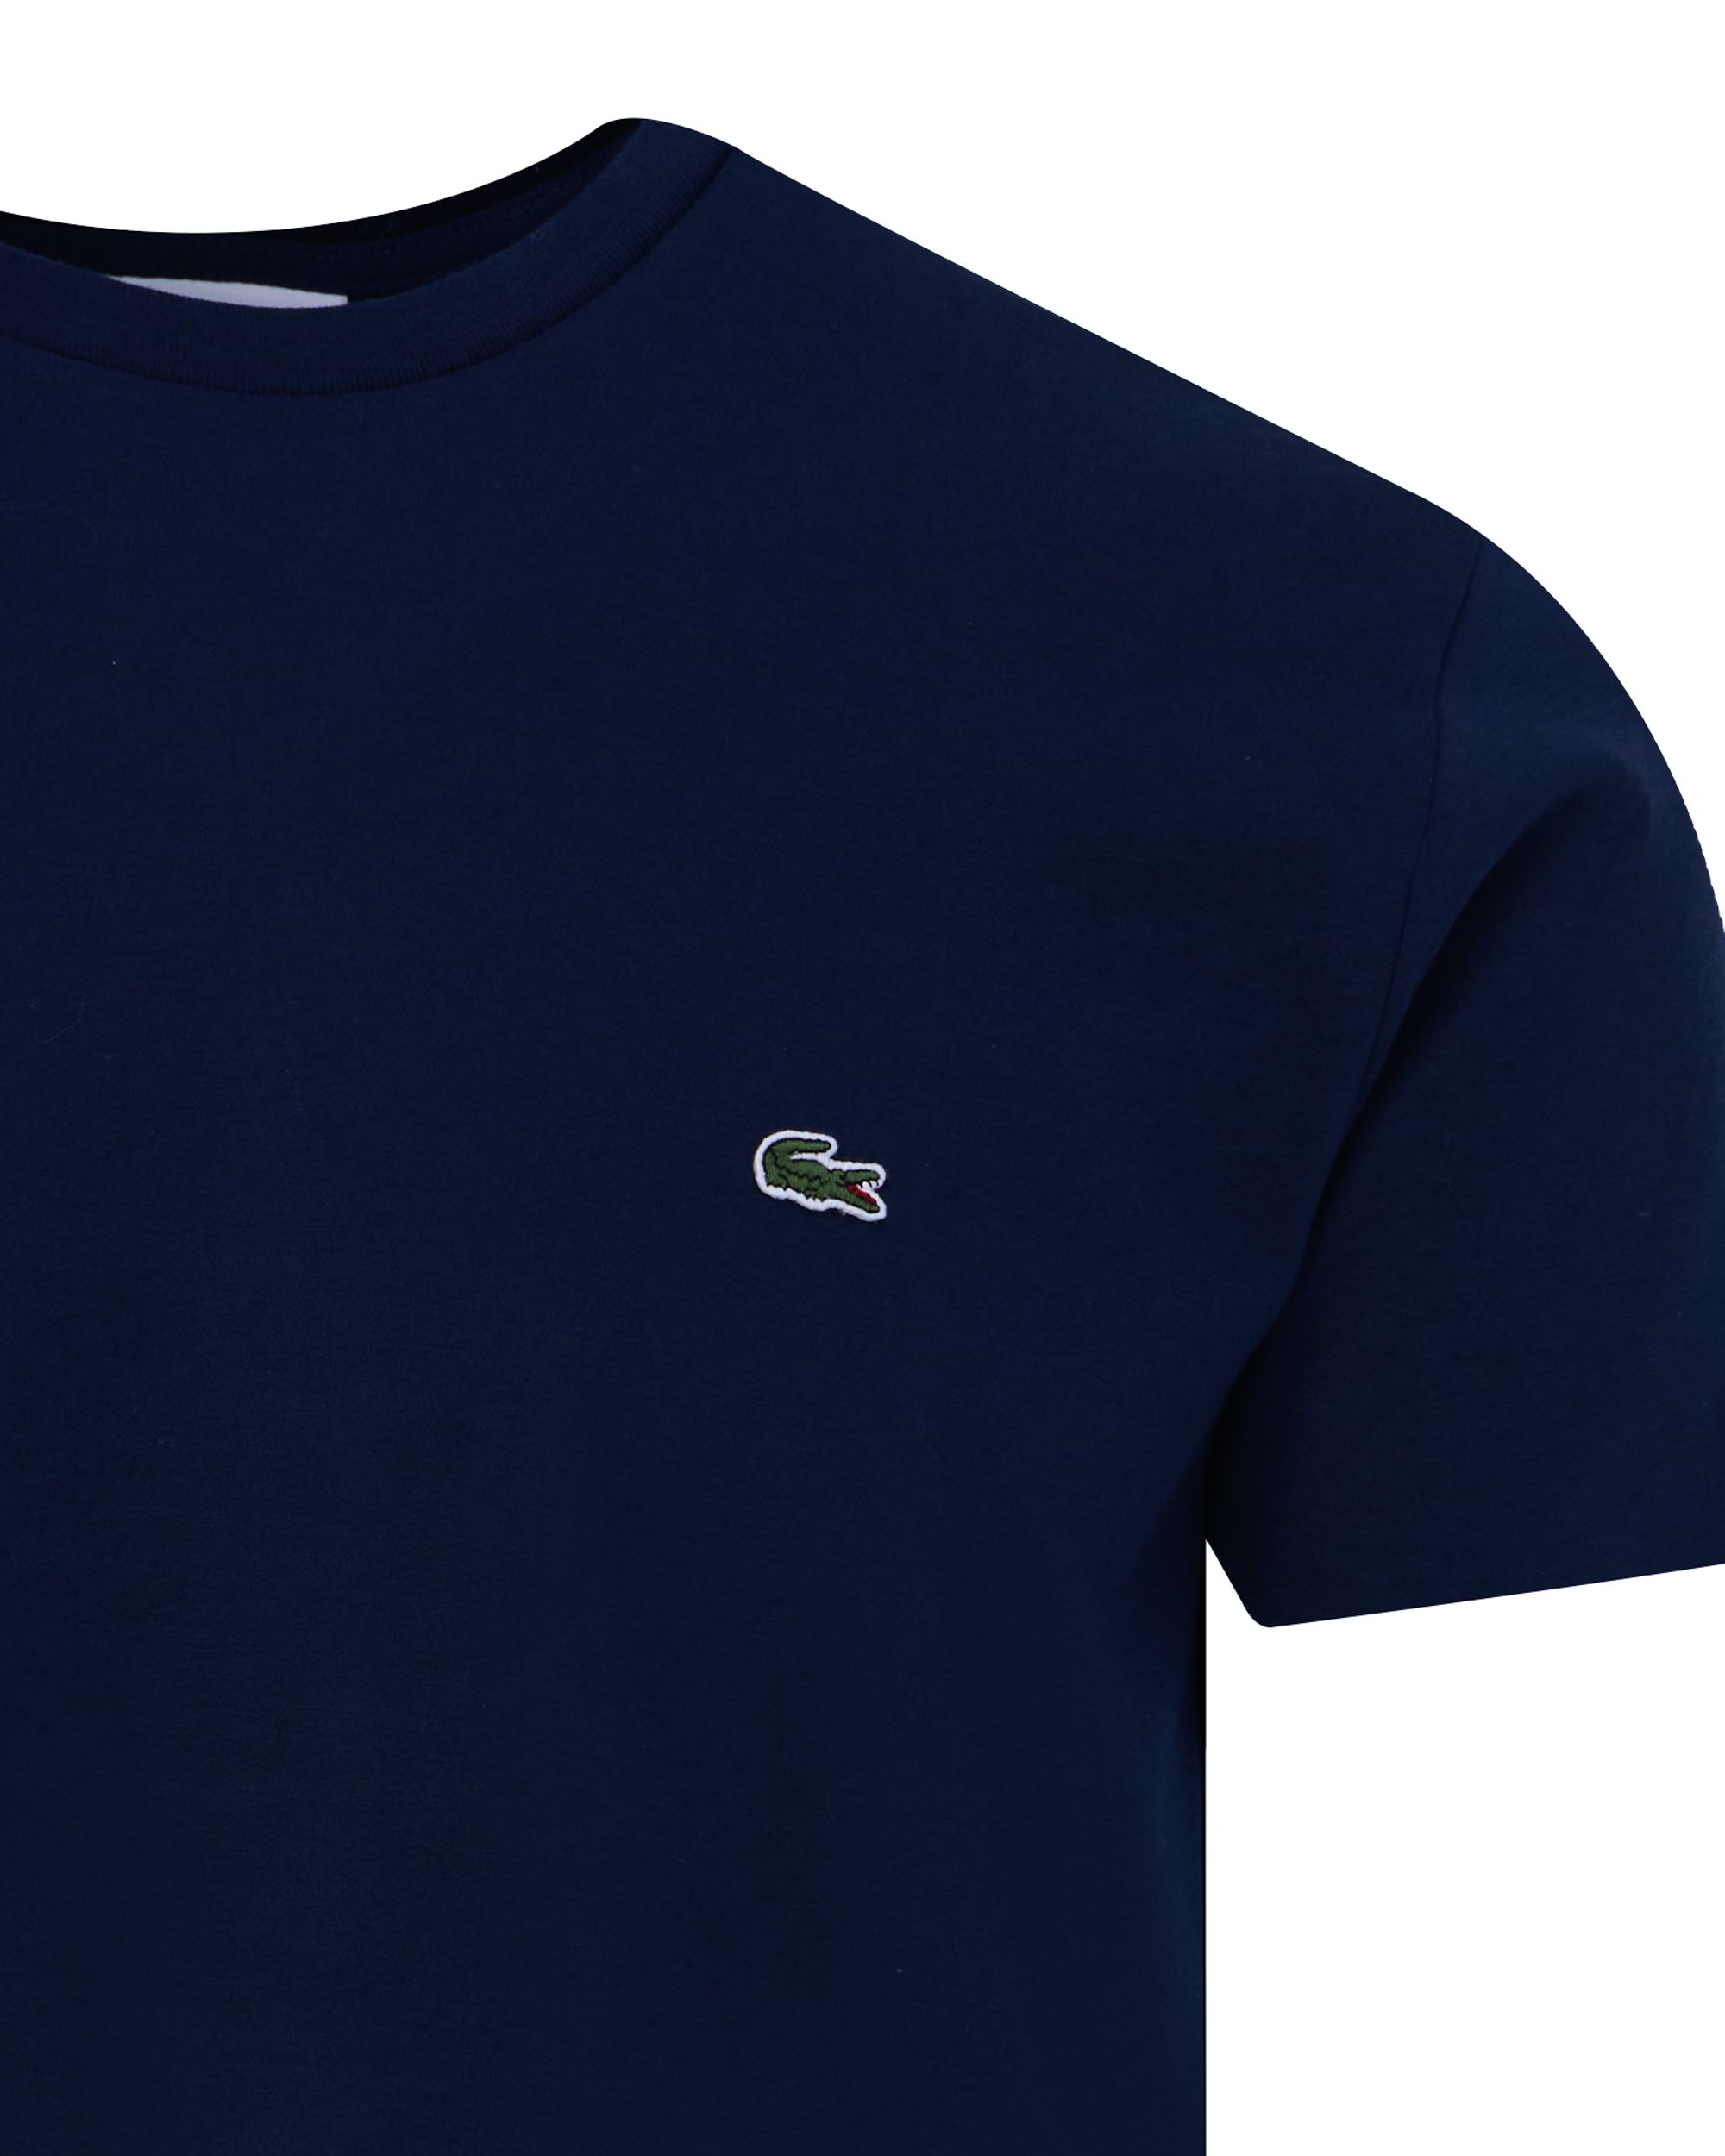 Lacoste T-shirt KM Donker blauw 092000-001-S